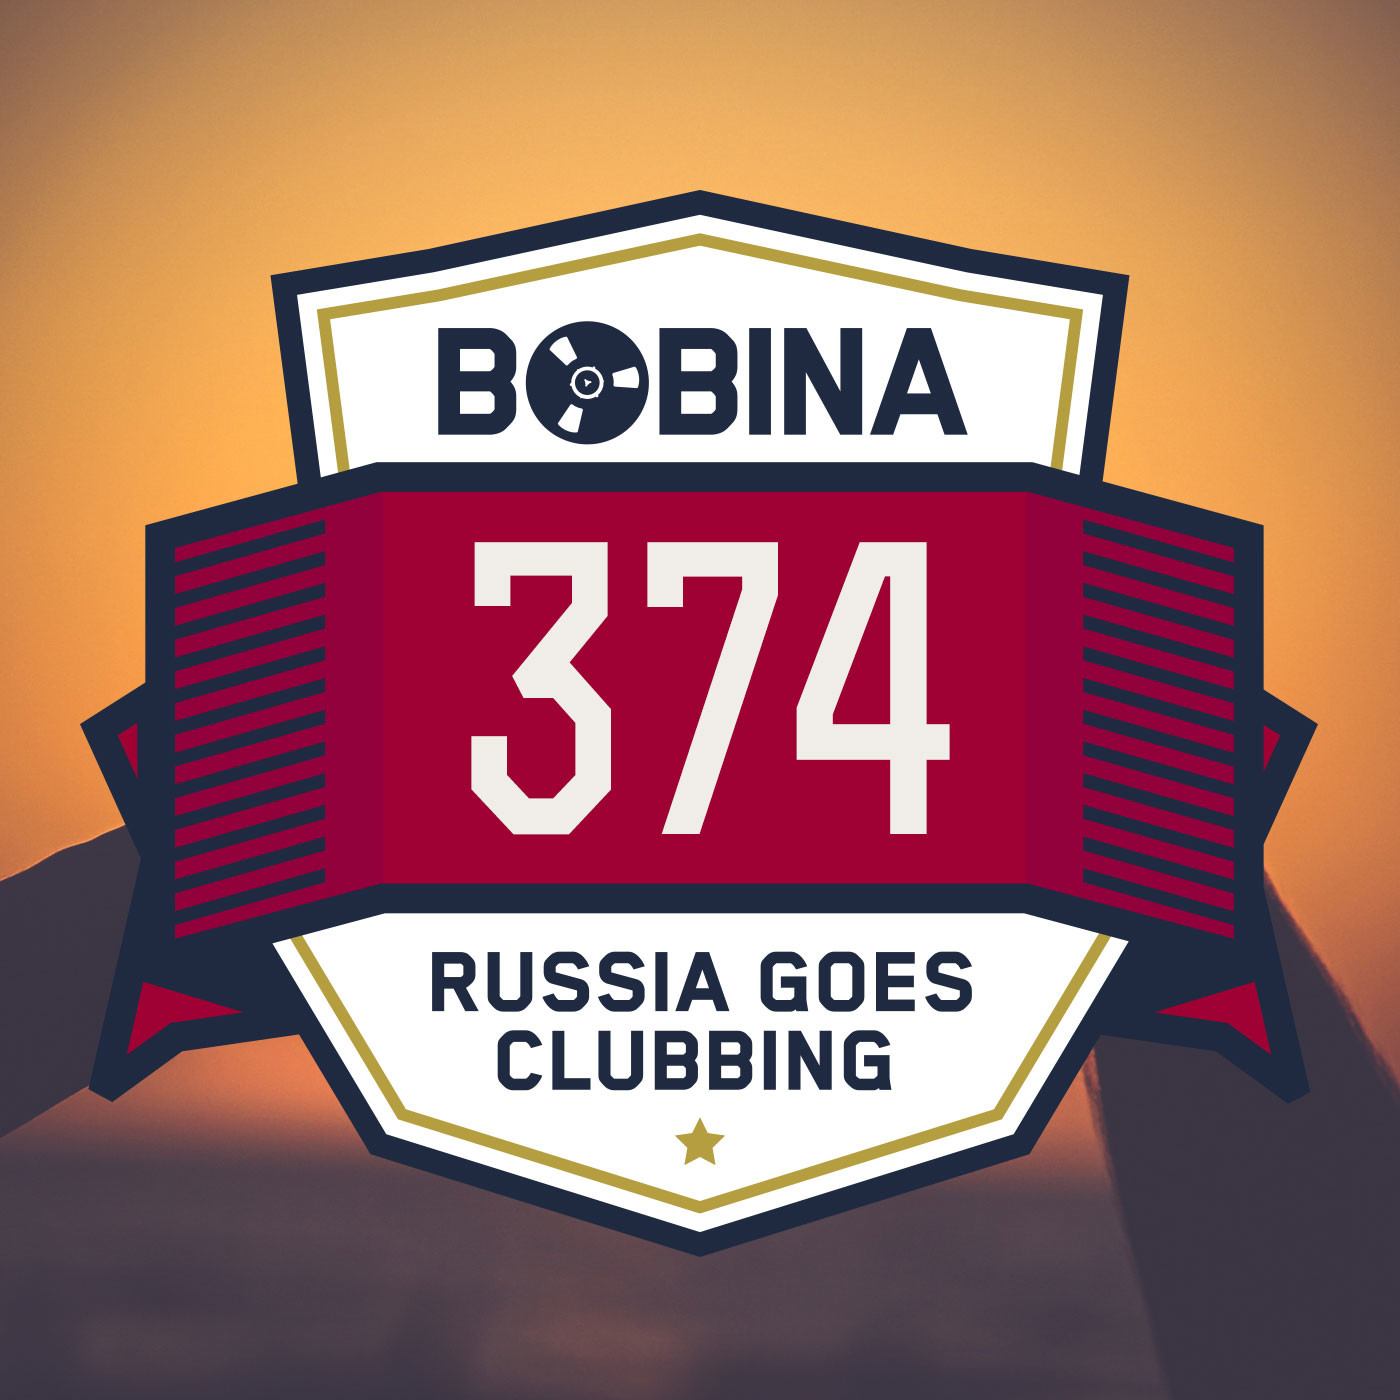 Bobina - Russia goes Clubbing. Гоу раша. Bobina – catchy!. Go to the Club. How to go to russia